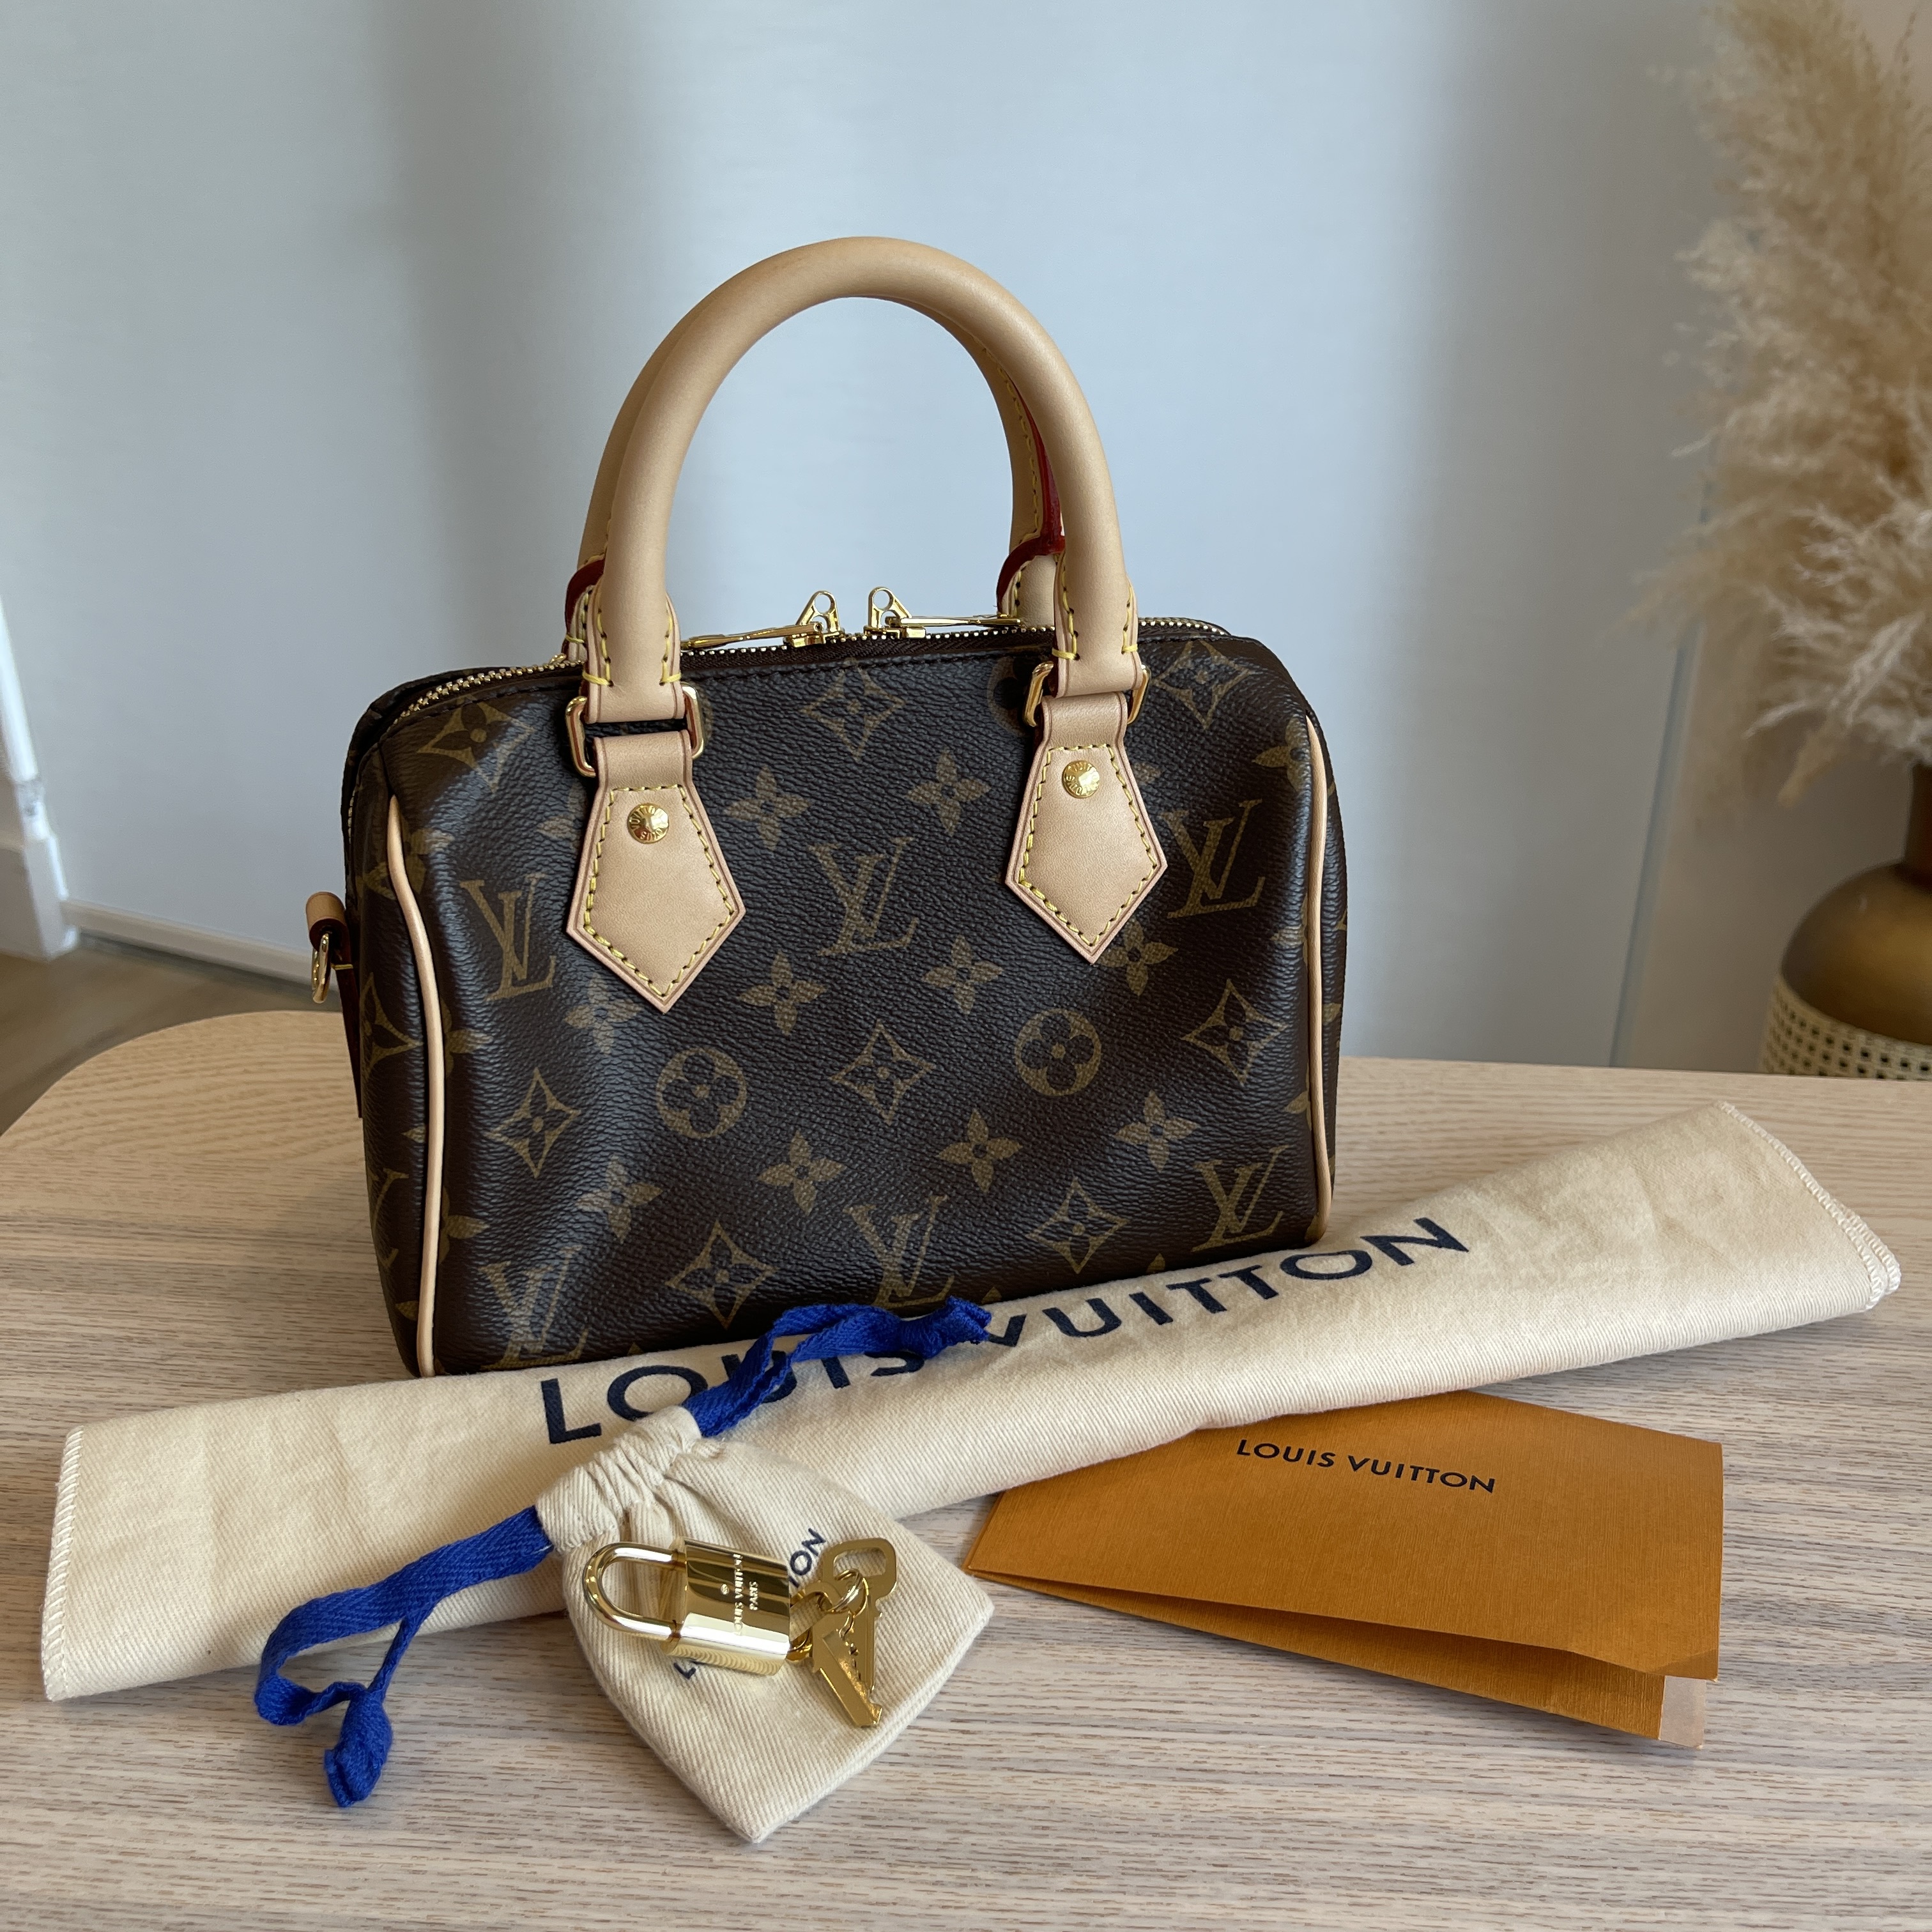 Lot 20 - Louis Vuitton: A Monogram leather Speedy 30